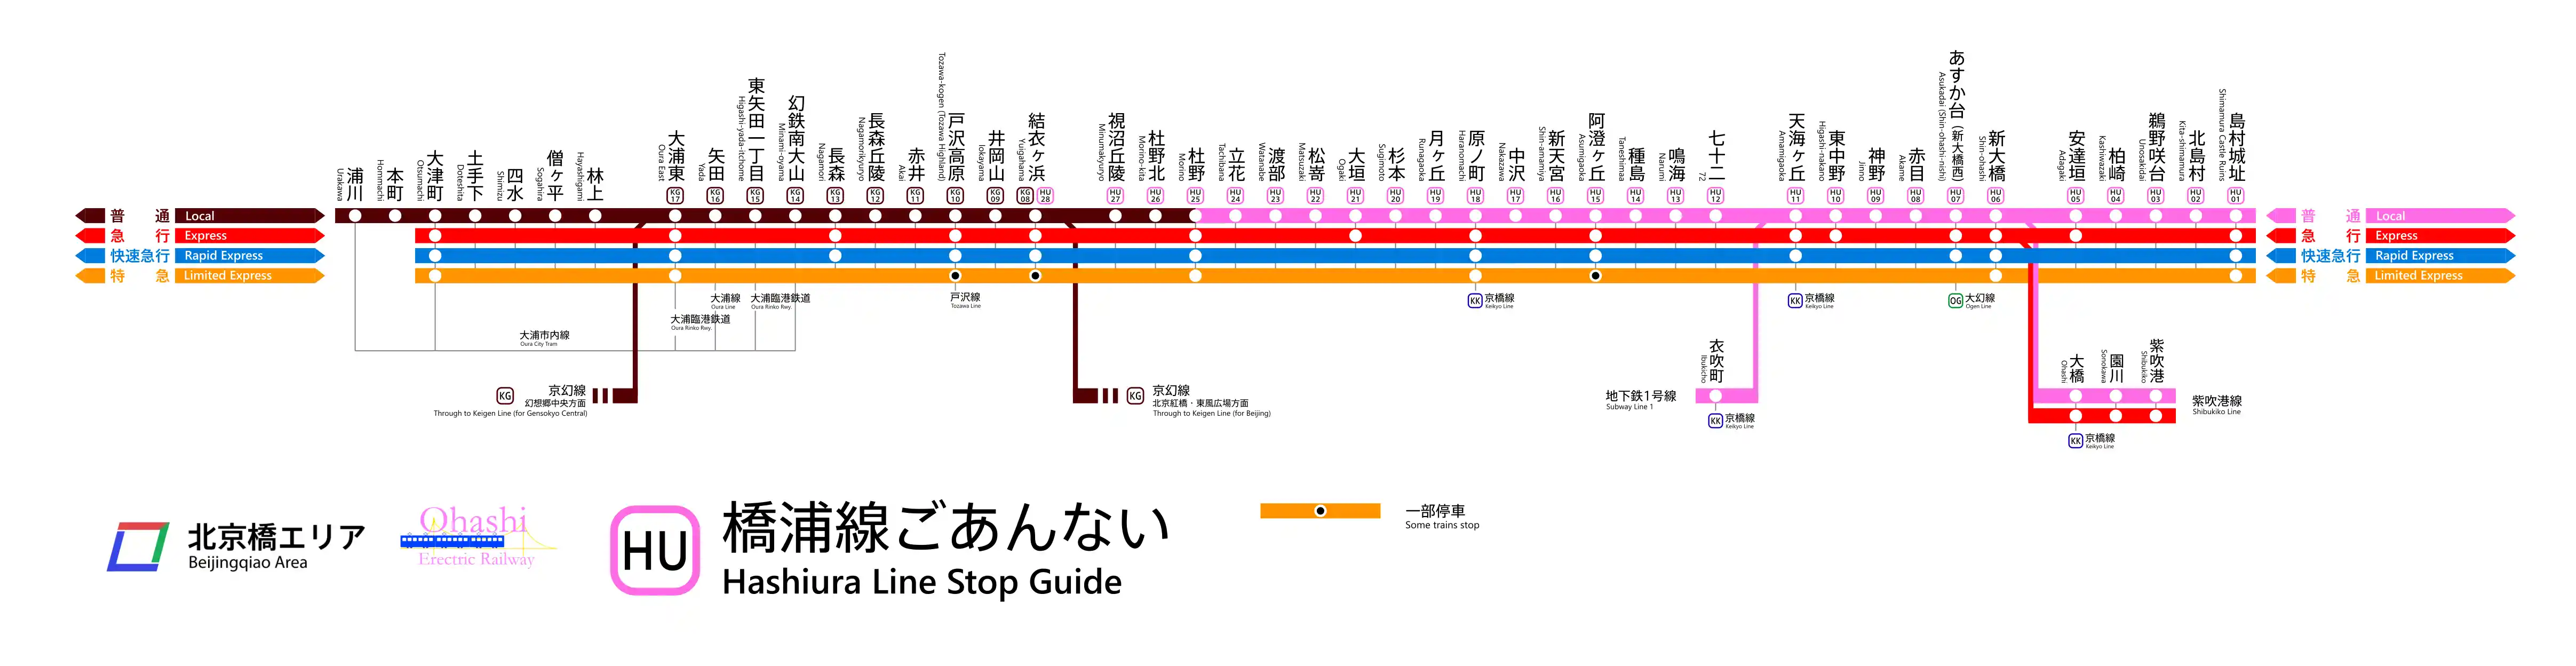 橋浦線202005.png